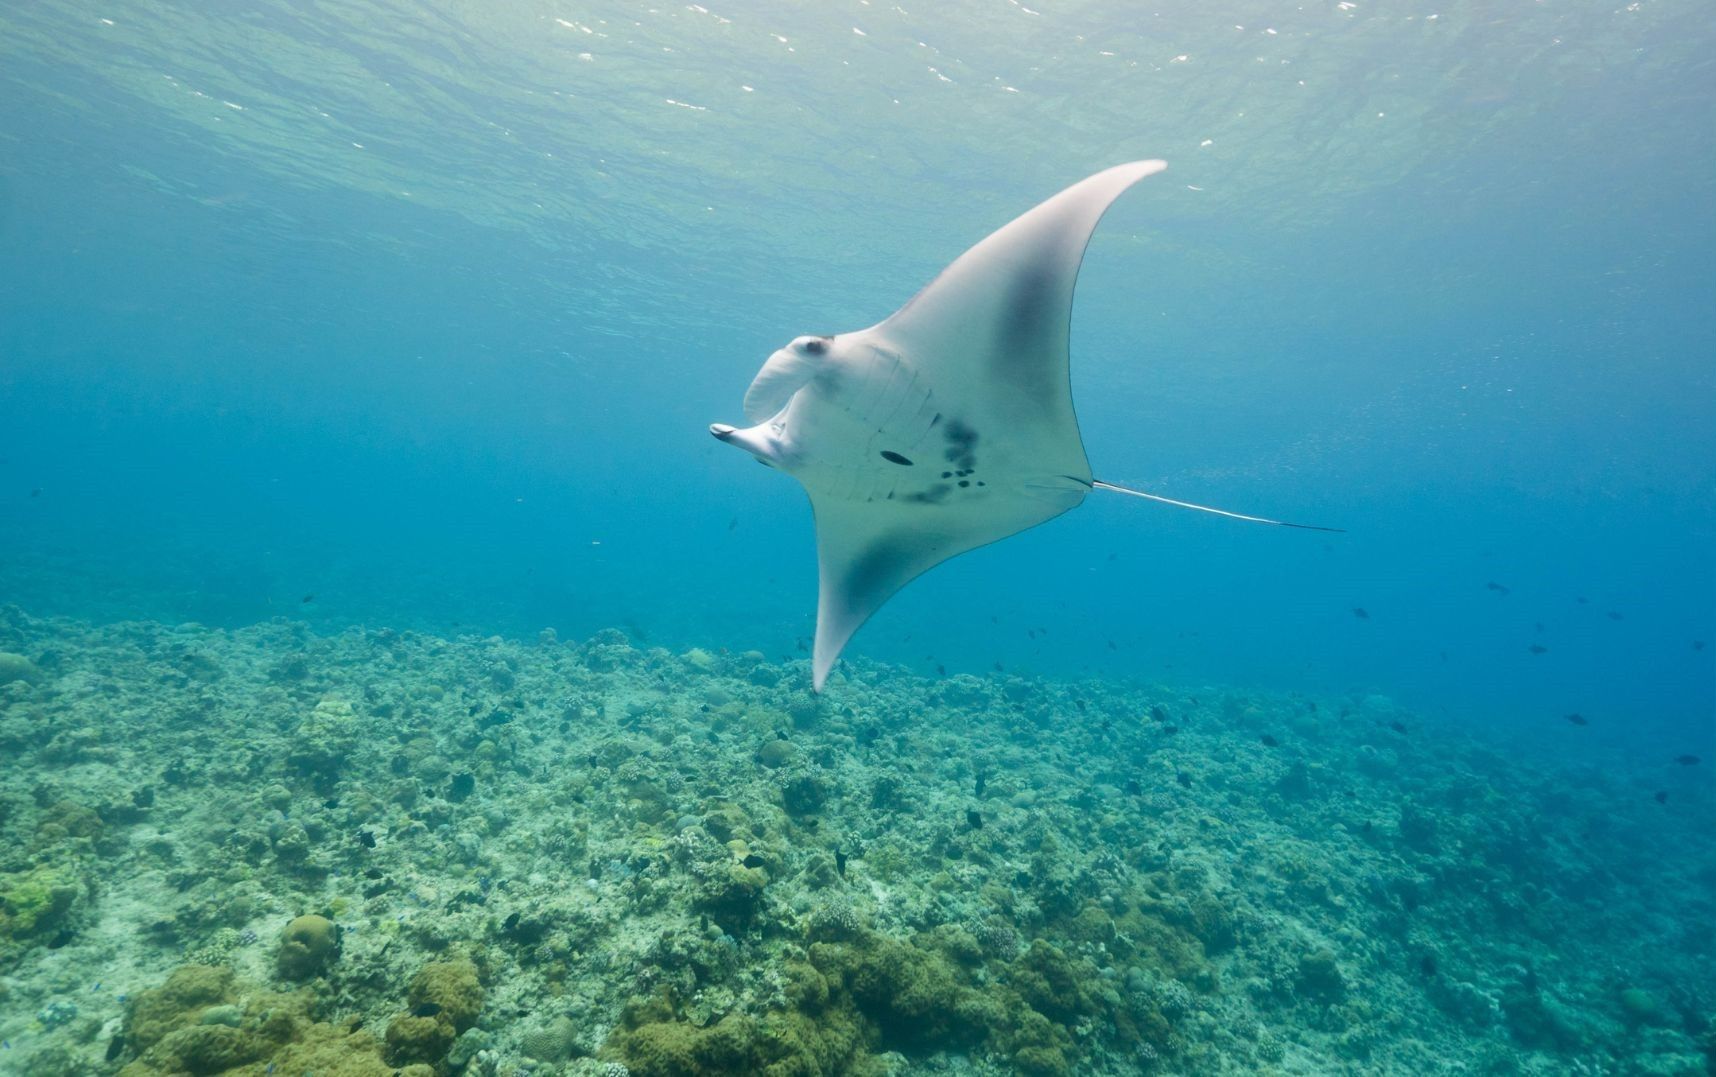 Tubbataha Reef named among 'best scuba diving destinations'